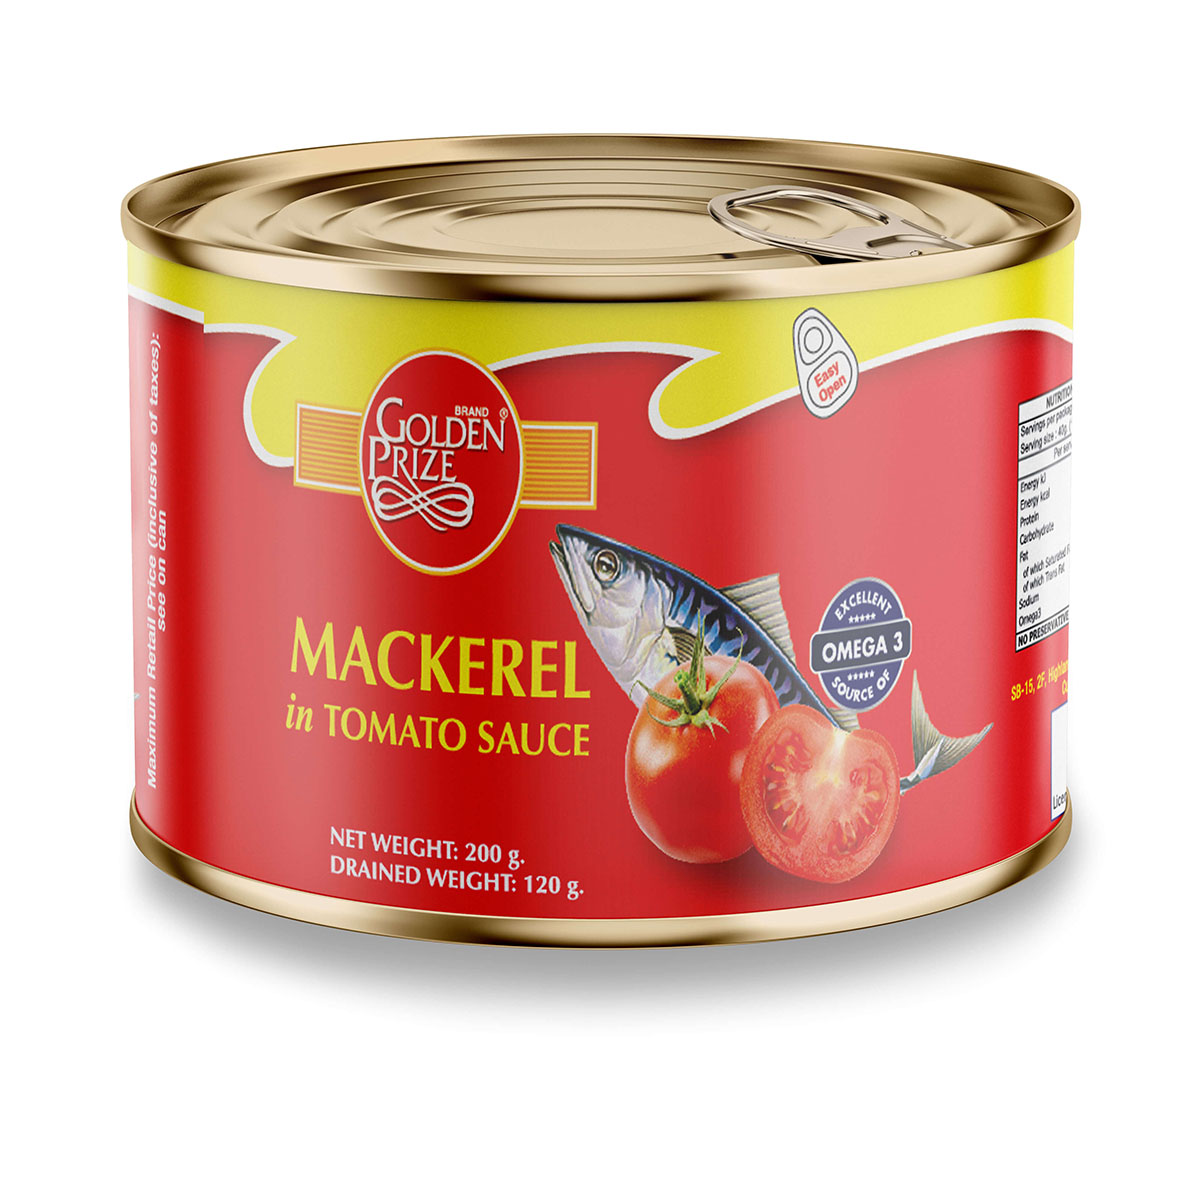 Mackerel in tomato sauce